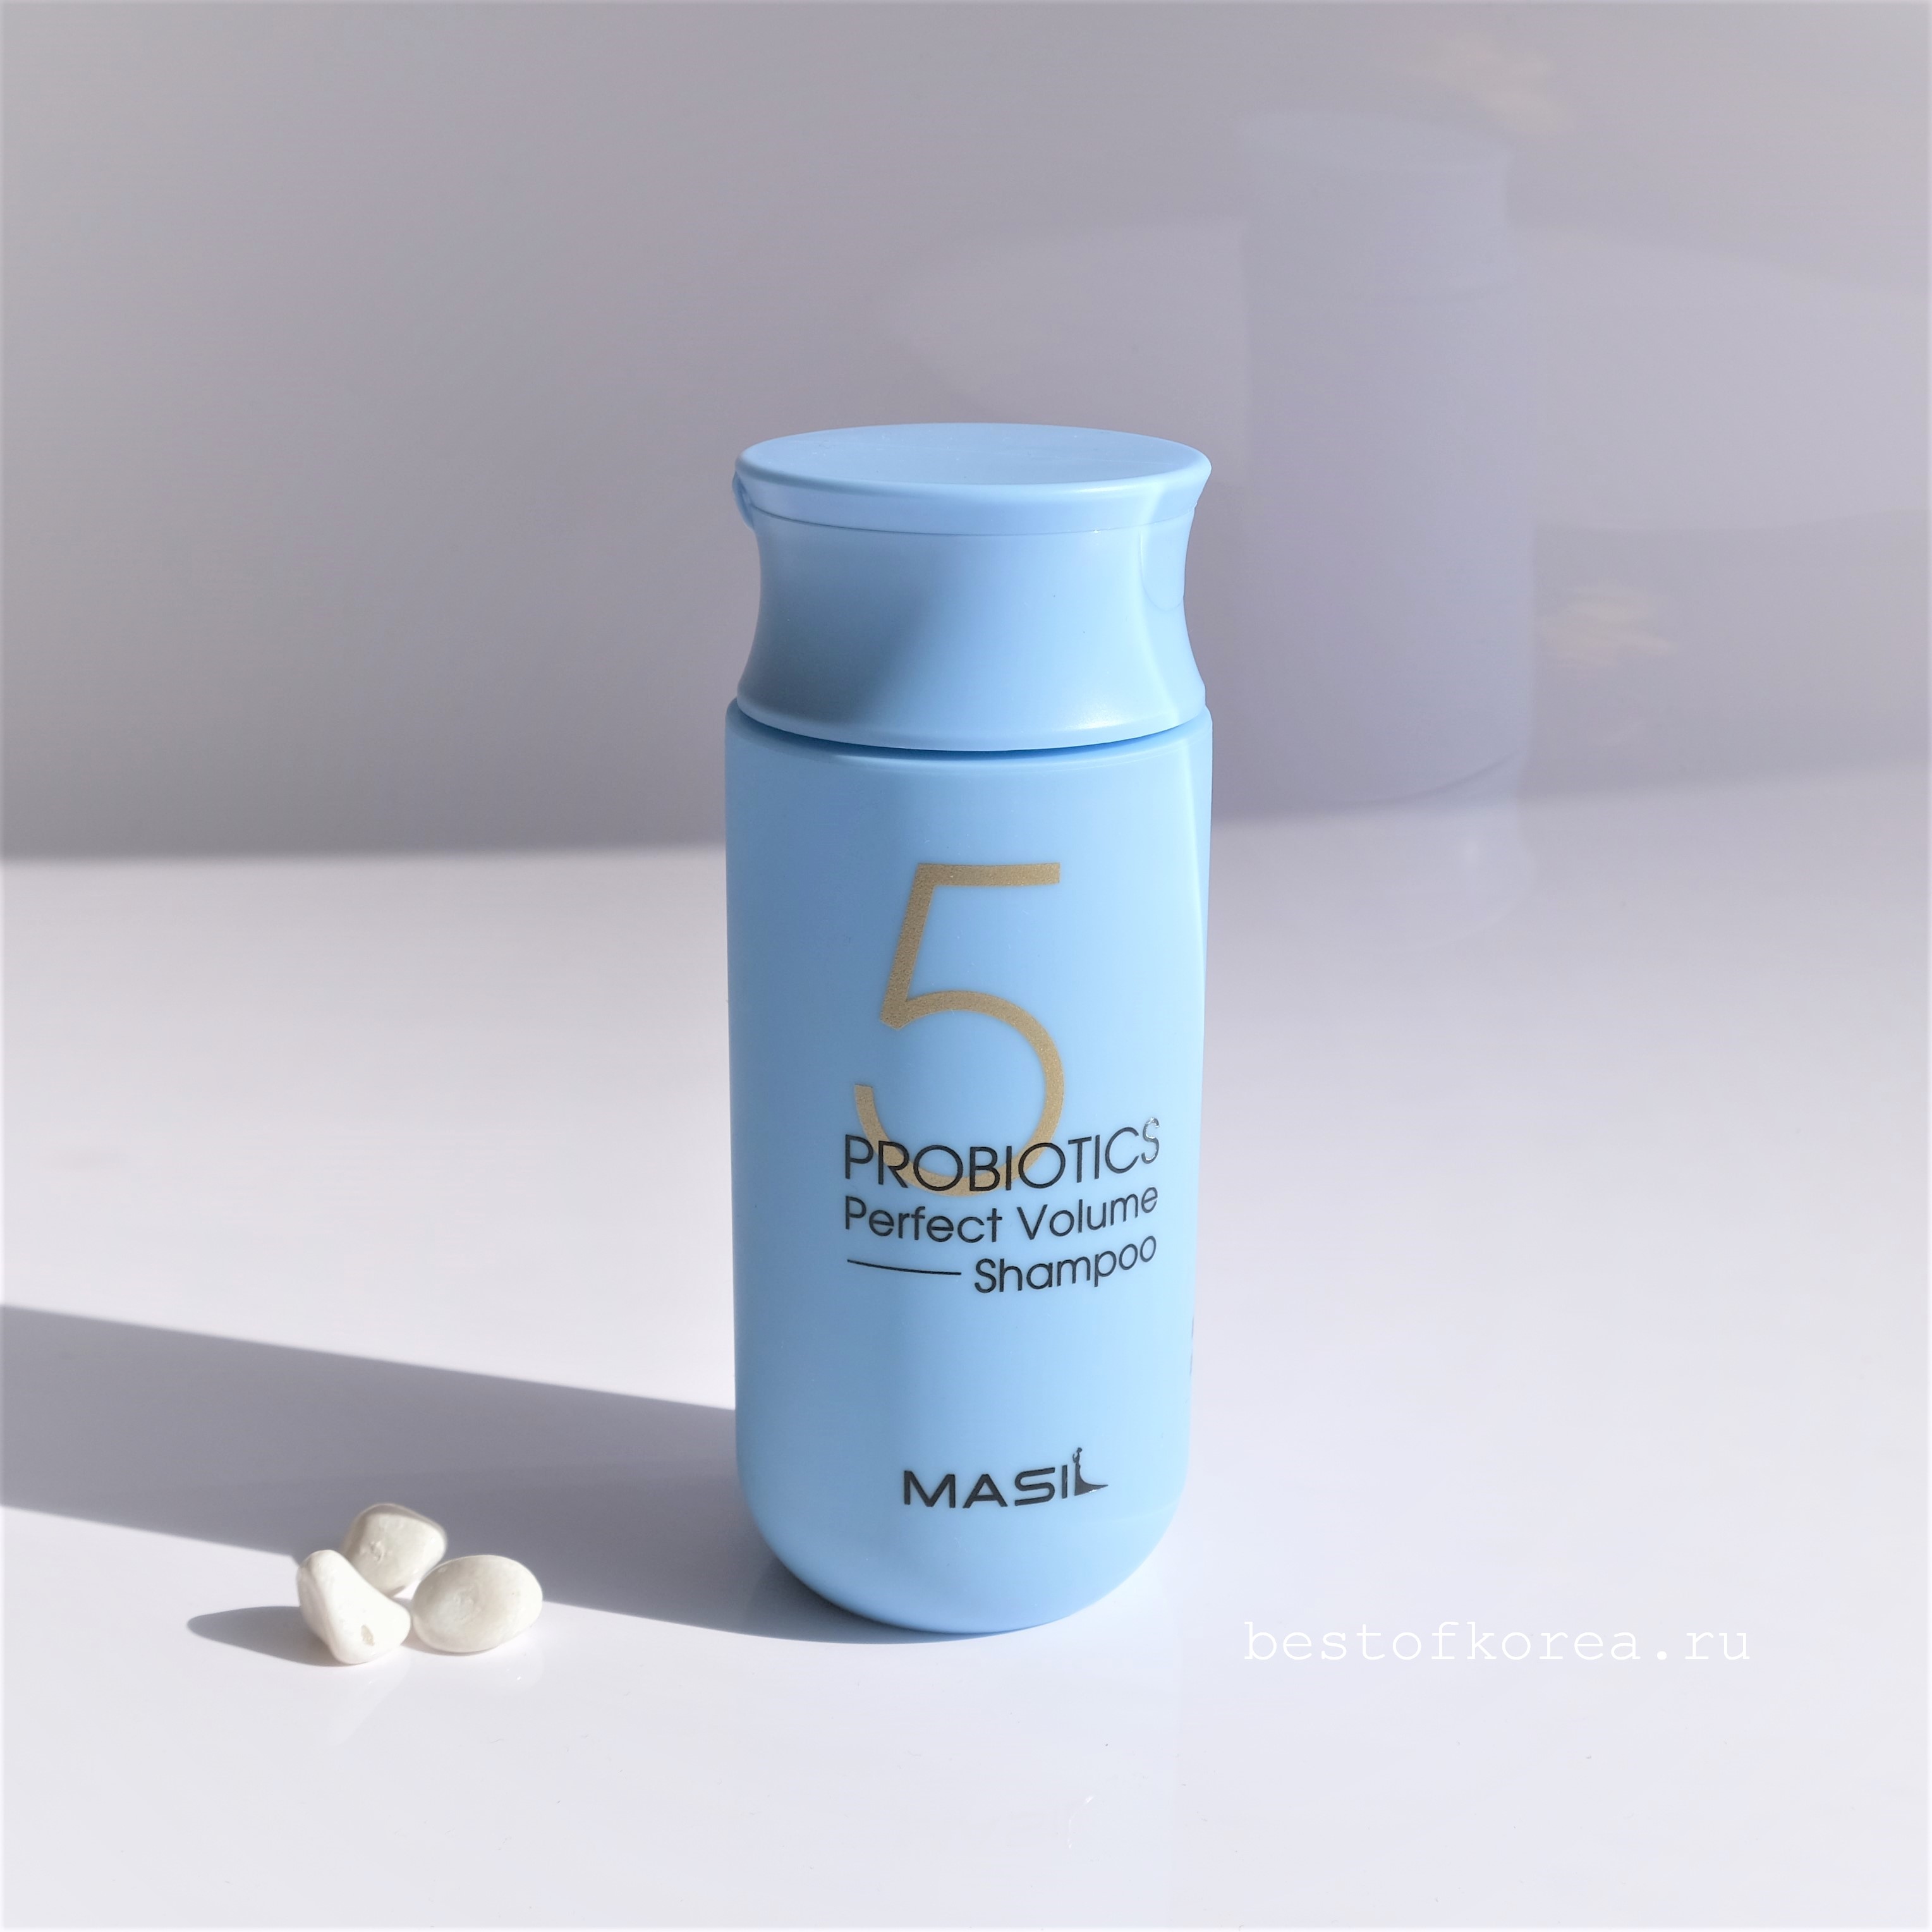 картинка Masil Шампунь для объема волос с пробиотиками 5 Probiotics Perfect Volume Shampoo 150мл